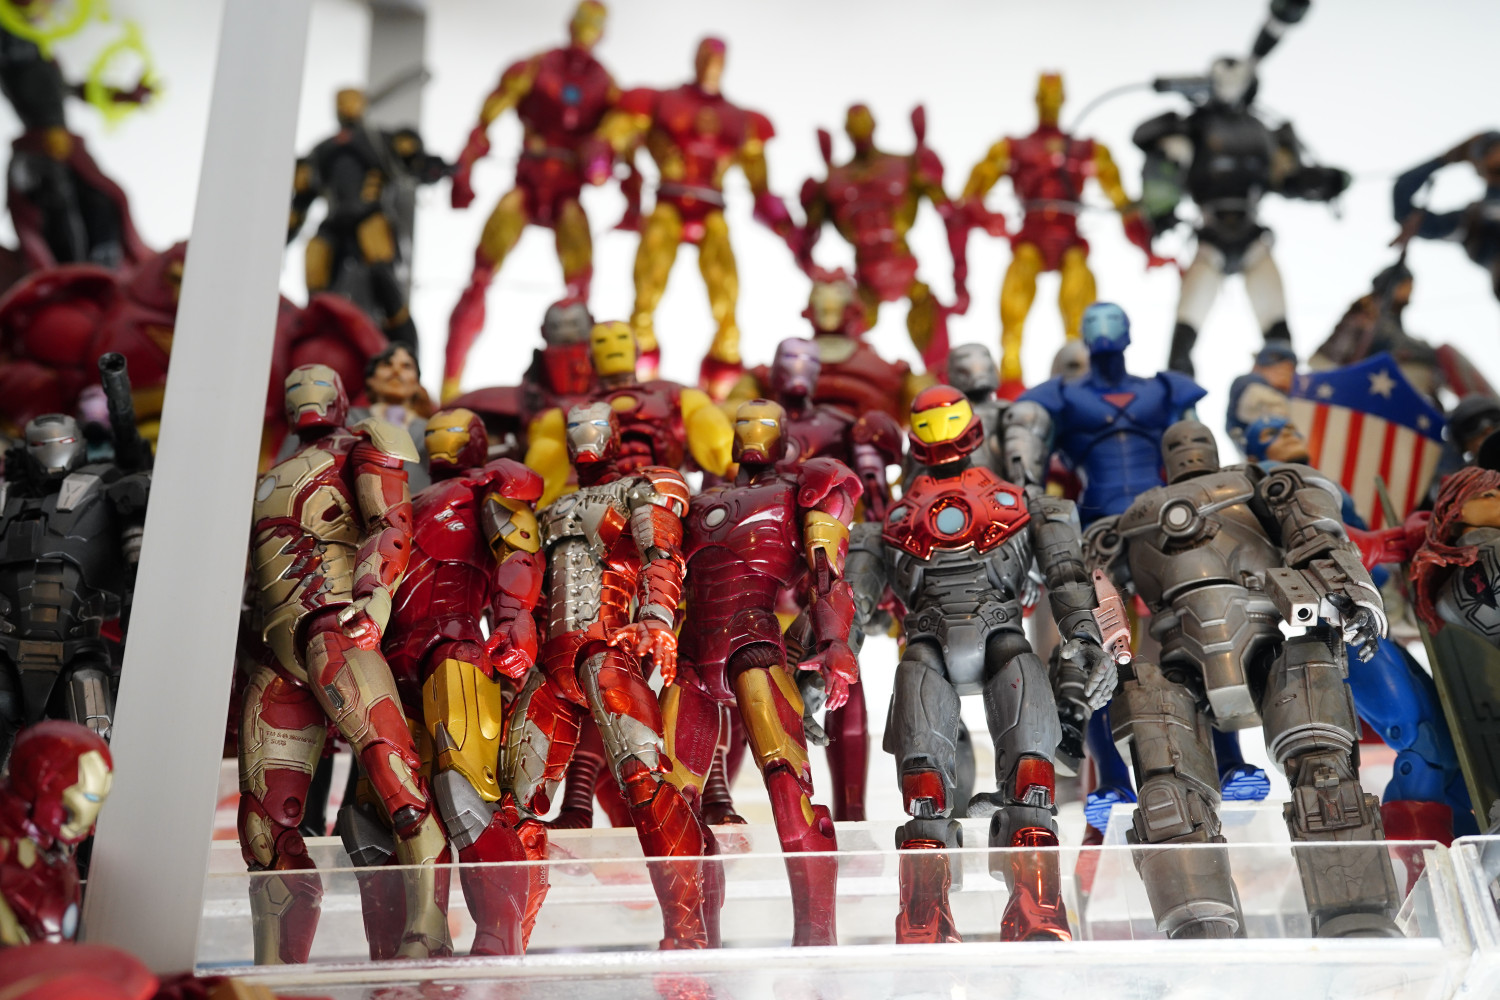 superhero action figure collection